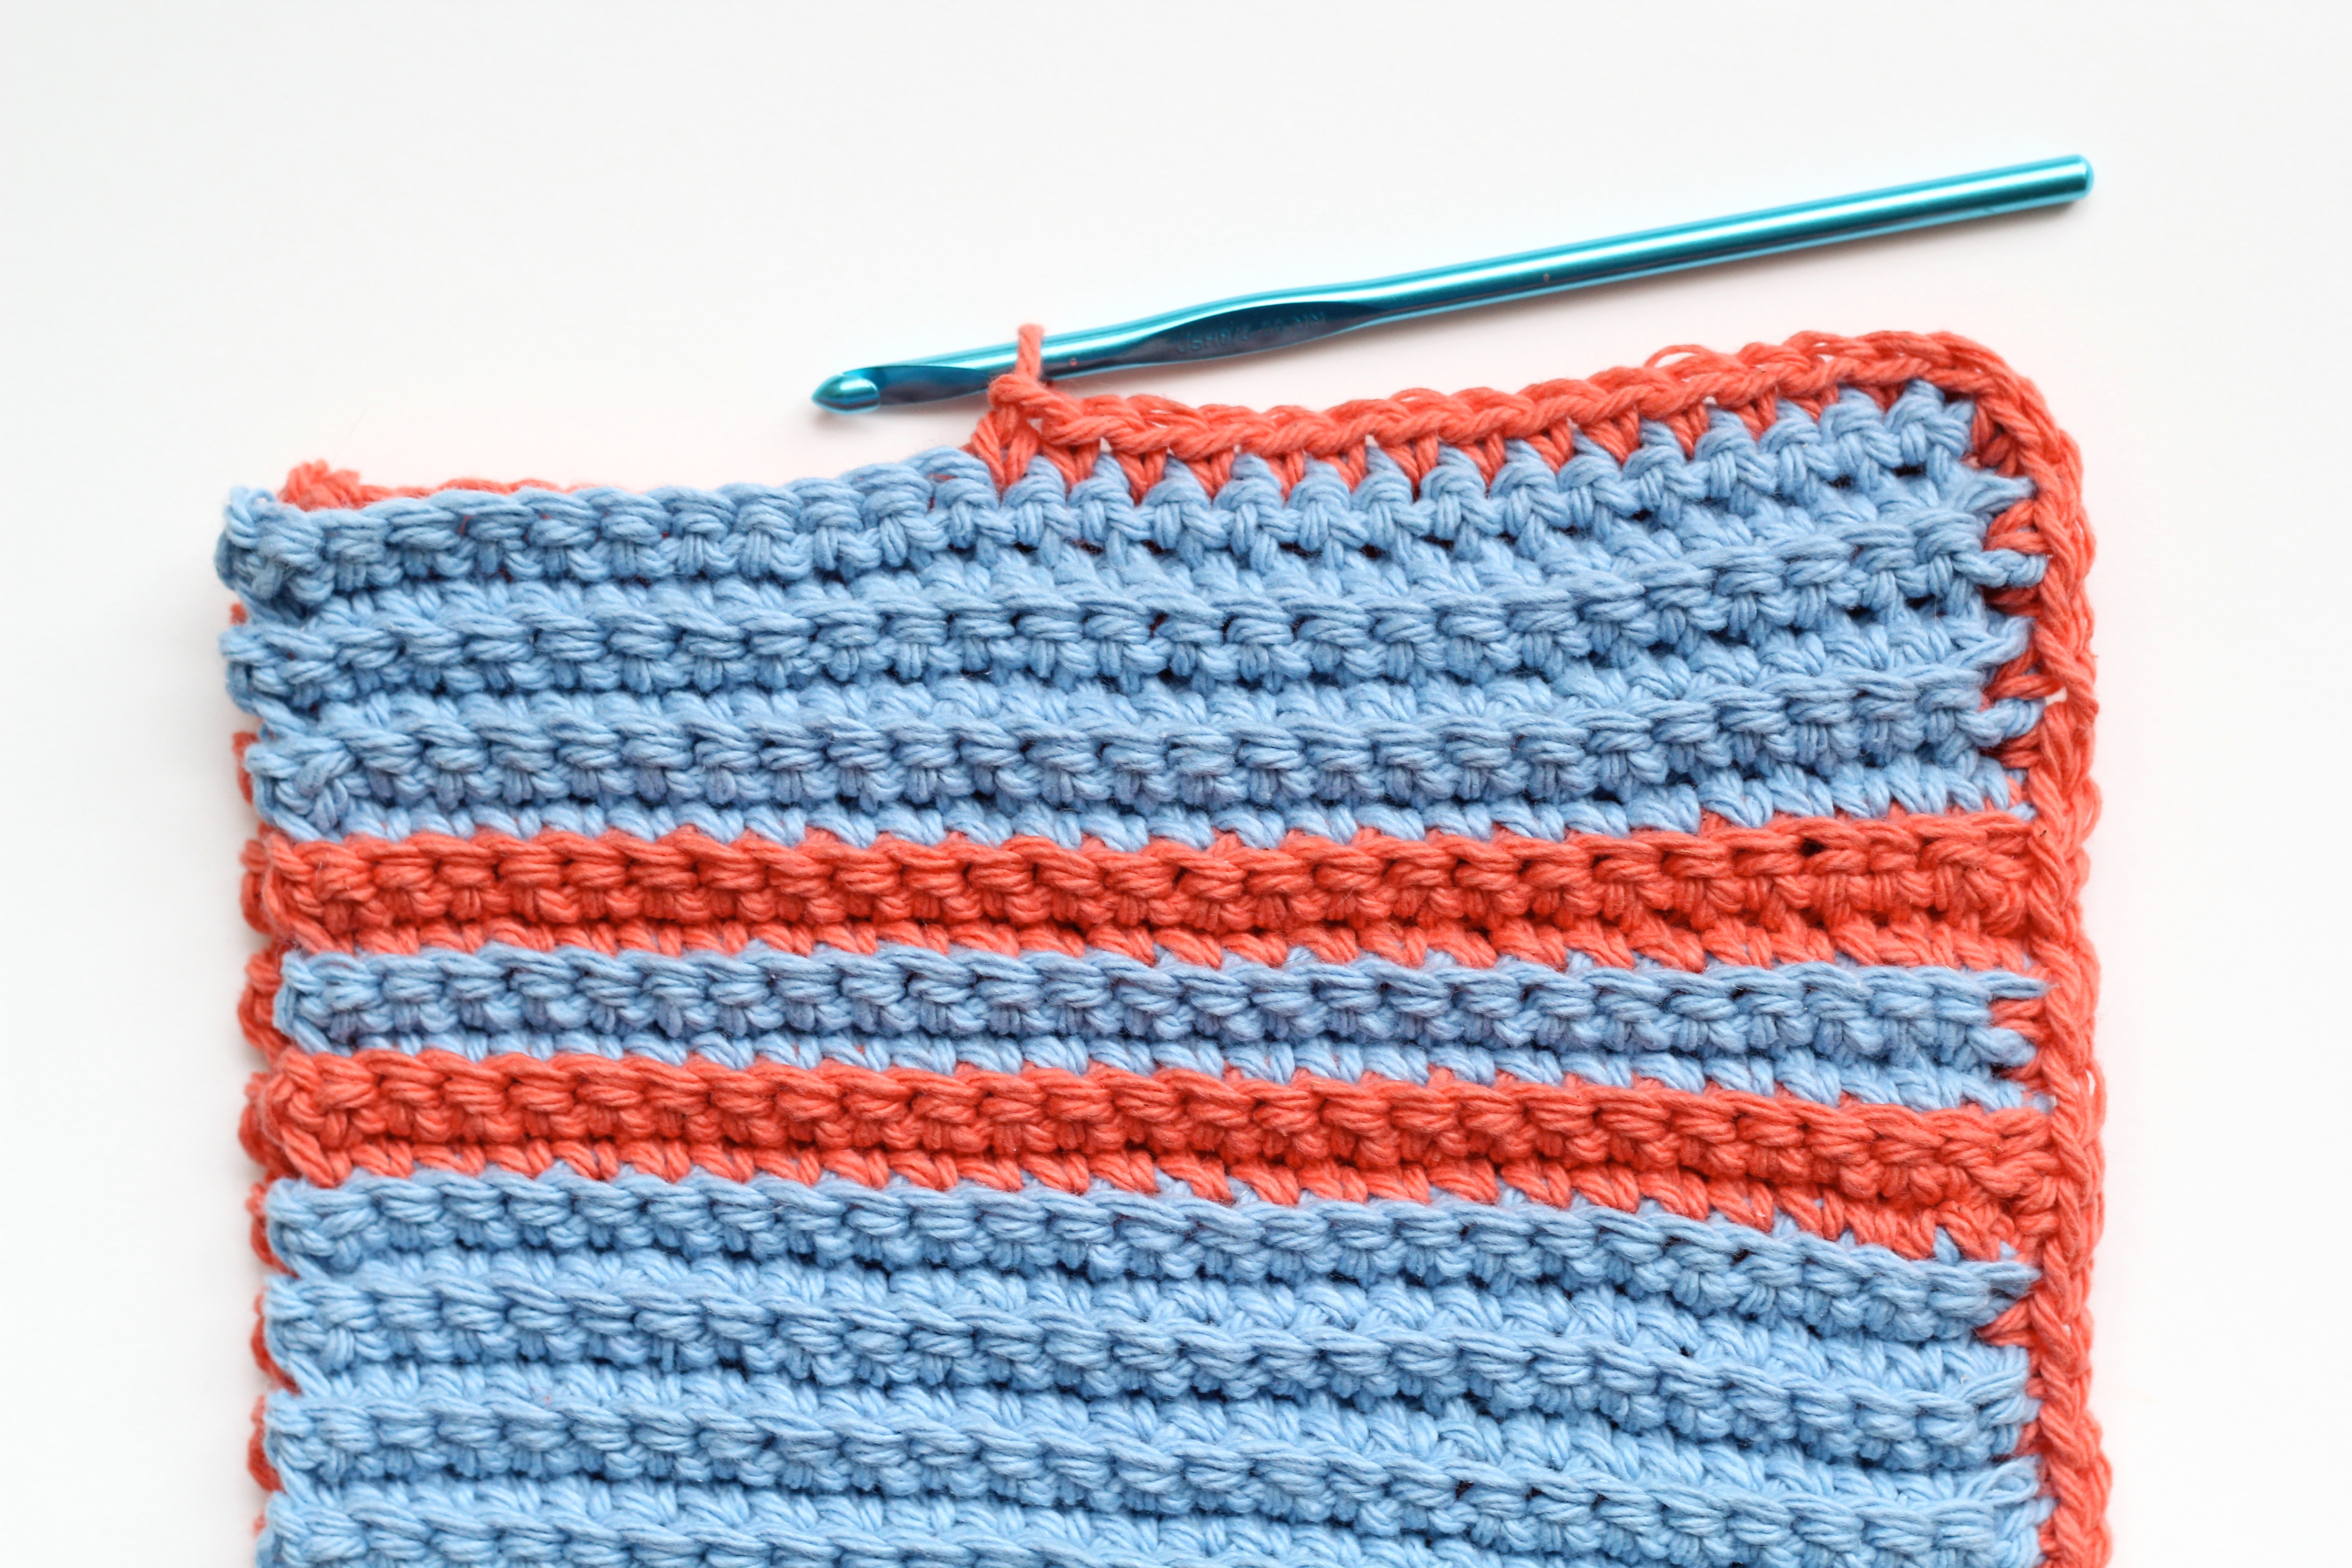 How to make a crochet potholder step 5